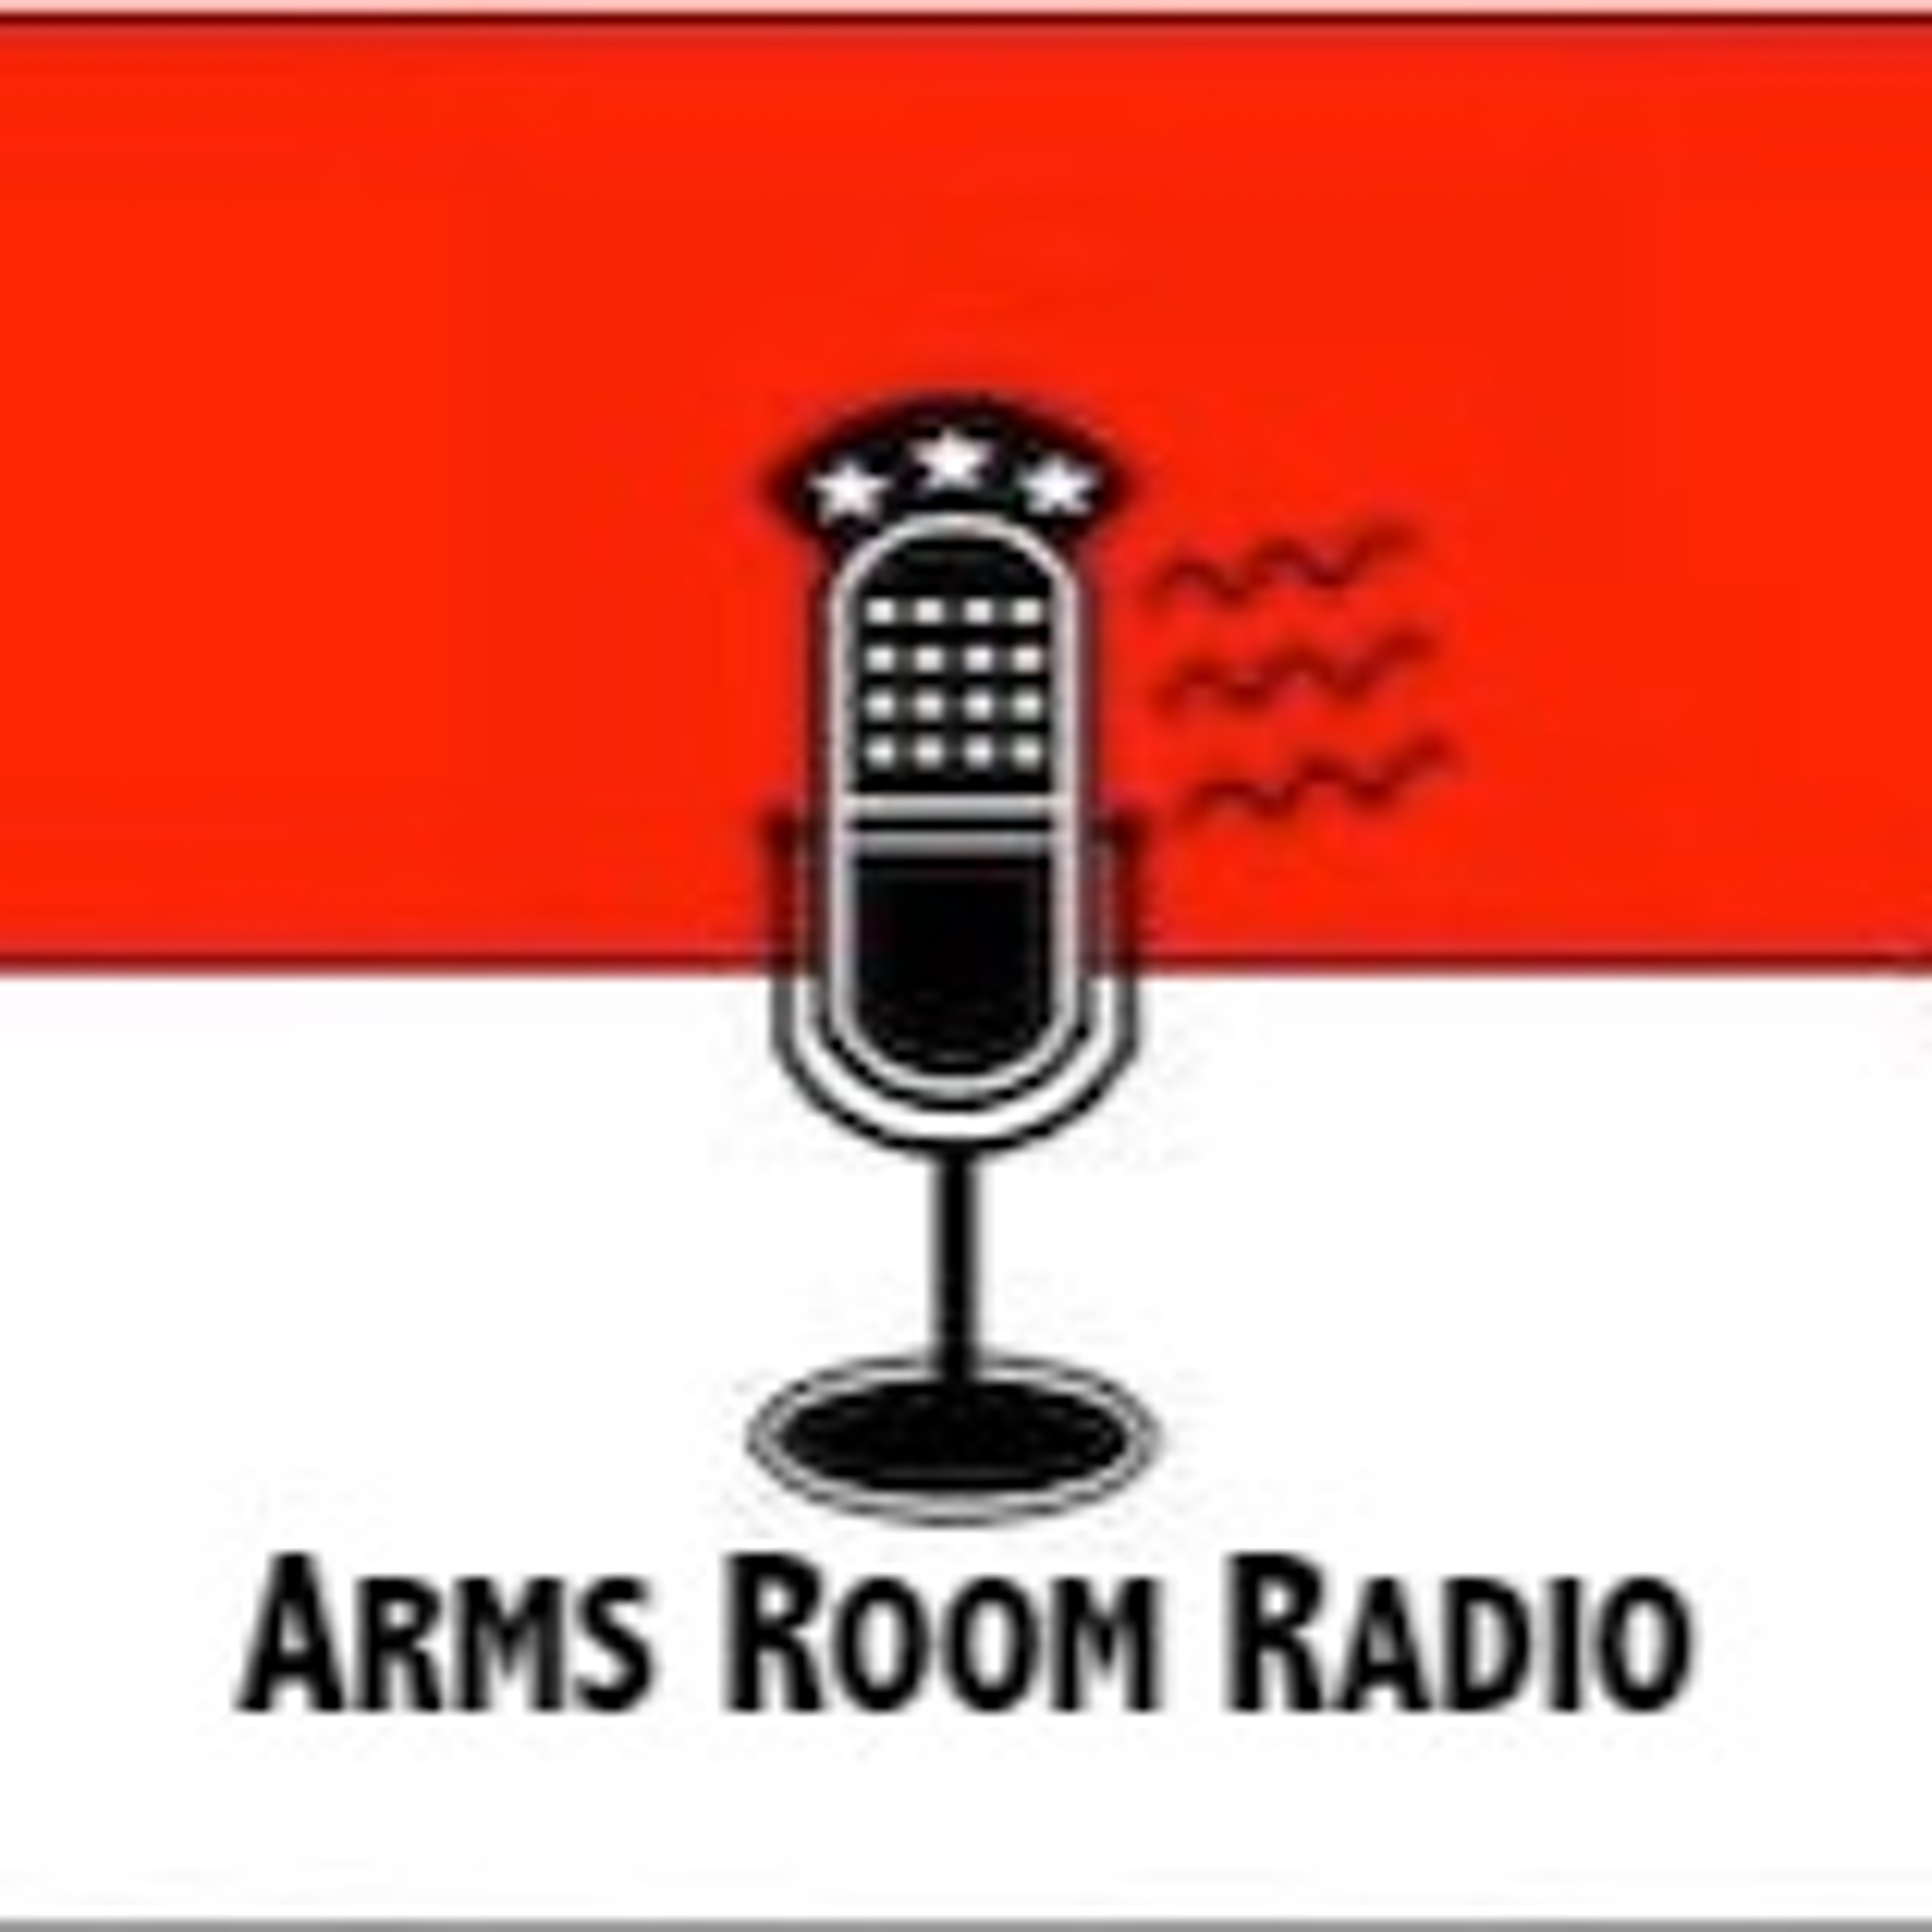 ArmsRoomRadio 02.20.21 Mr. Todd Fossey, and Congresswoman Boebert